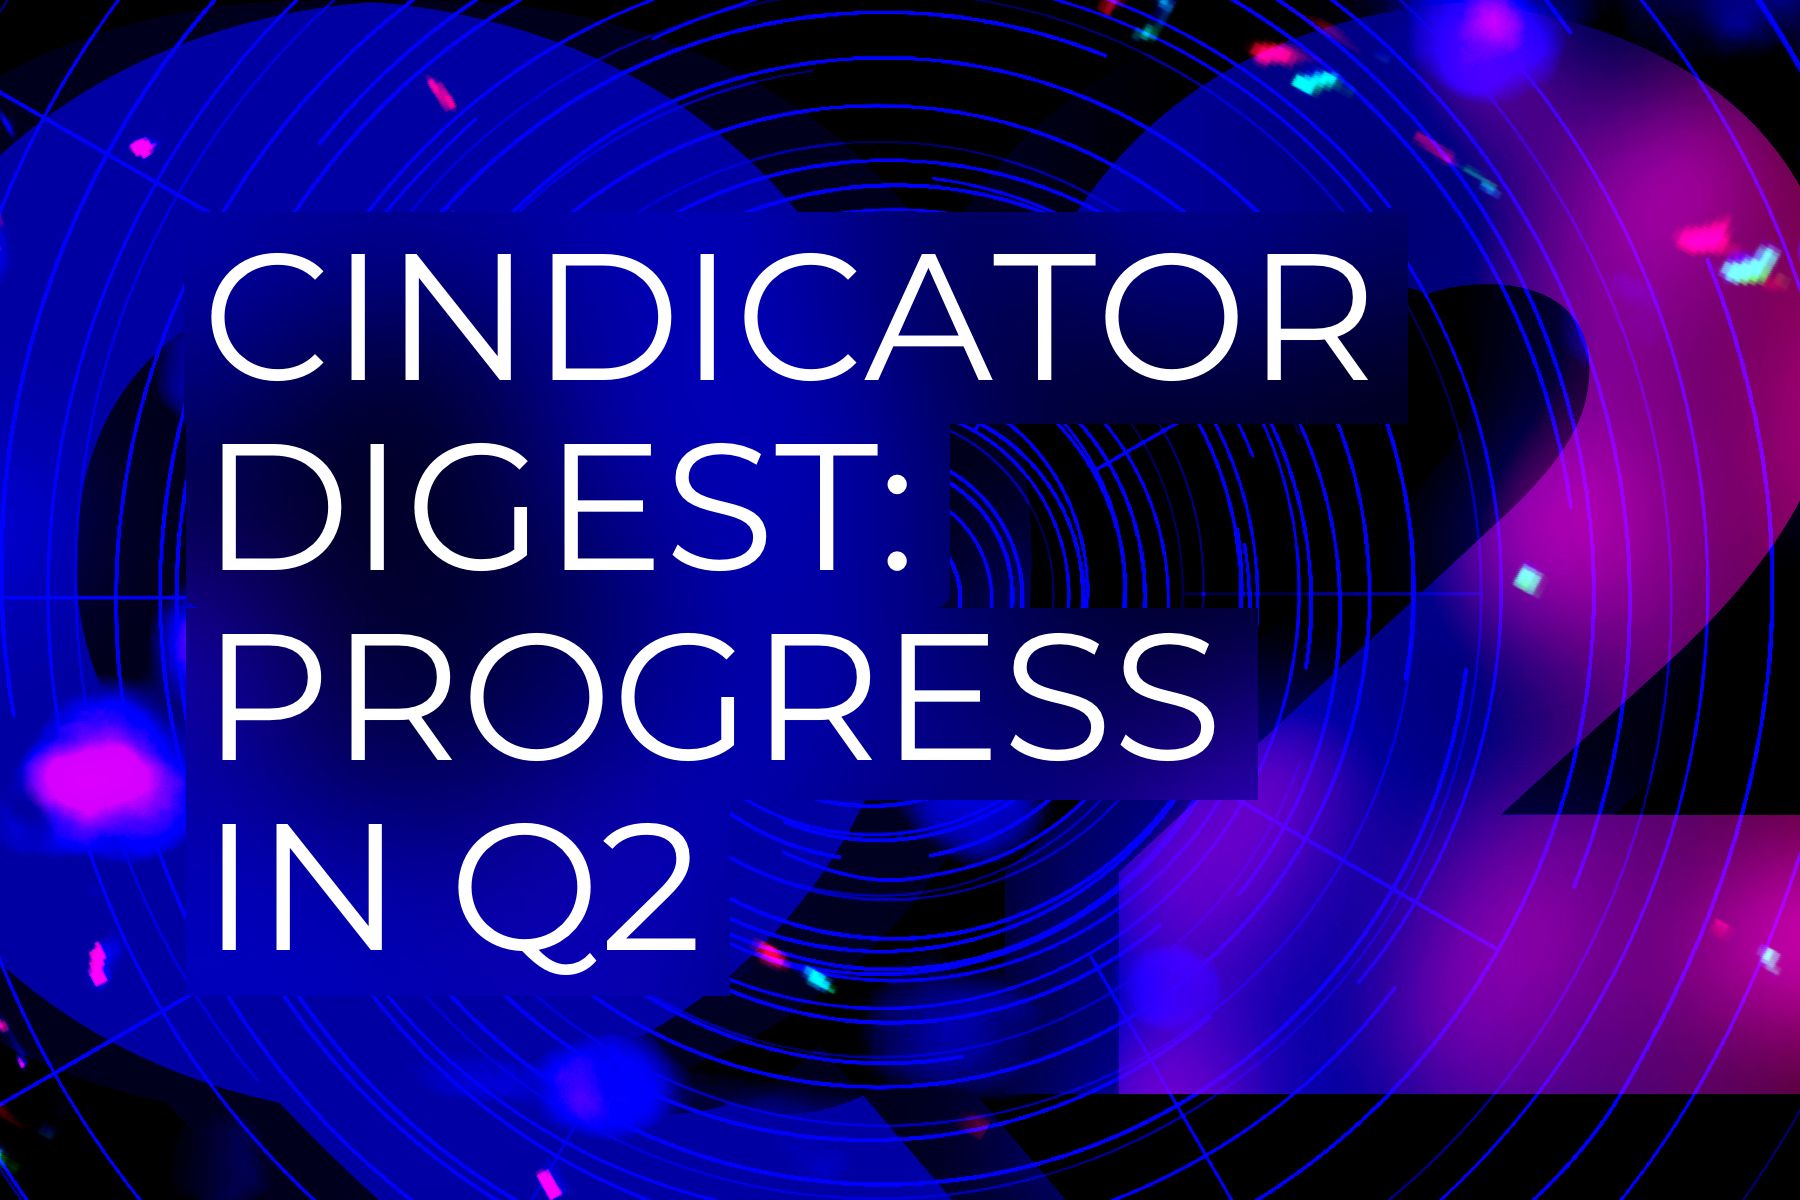 Cindicator Digest: Progress in Q2